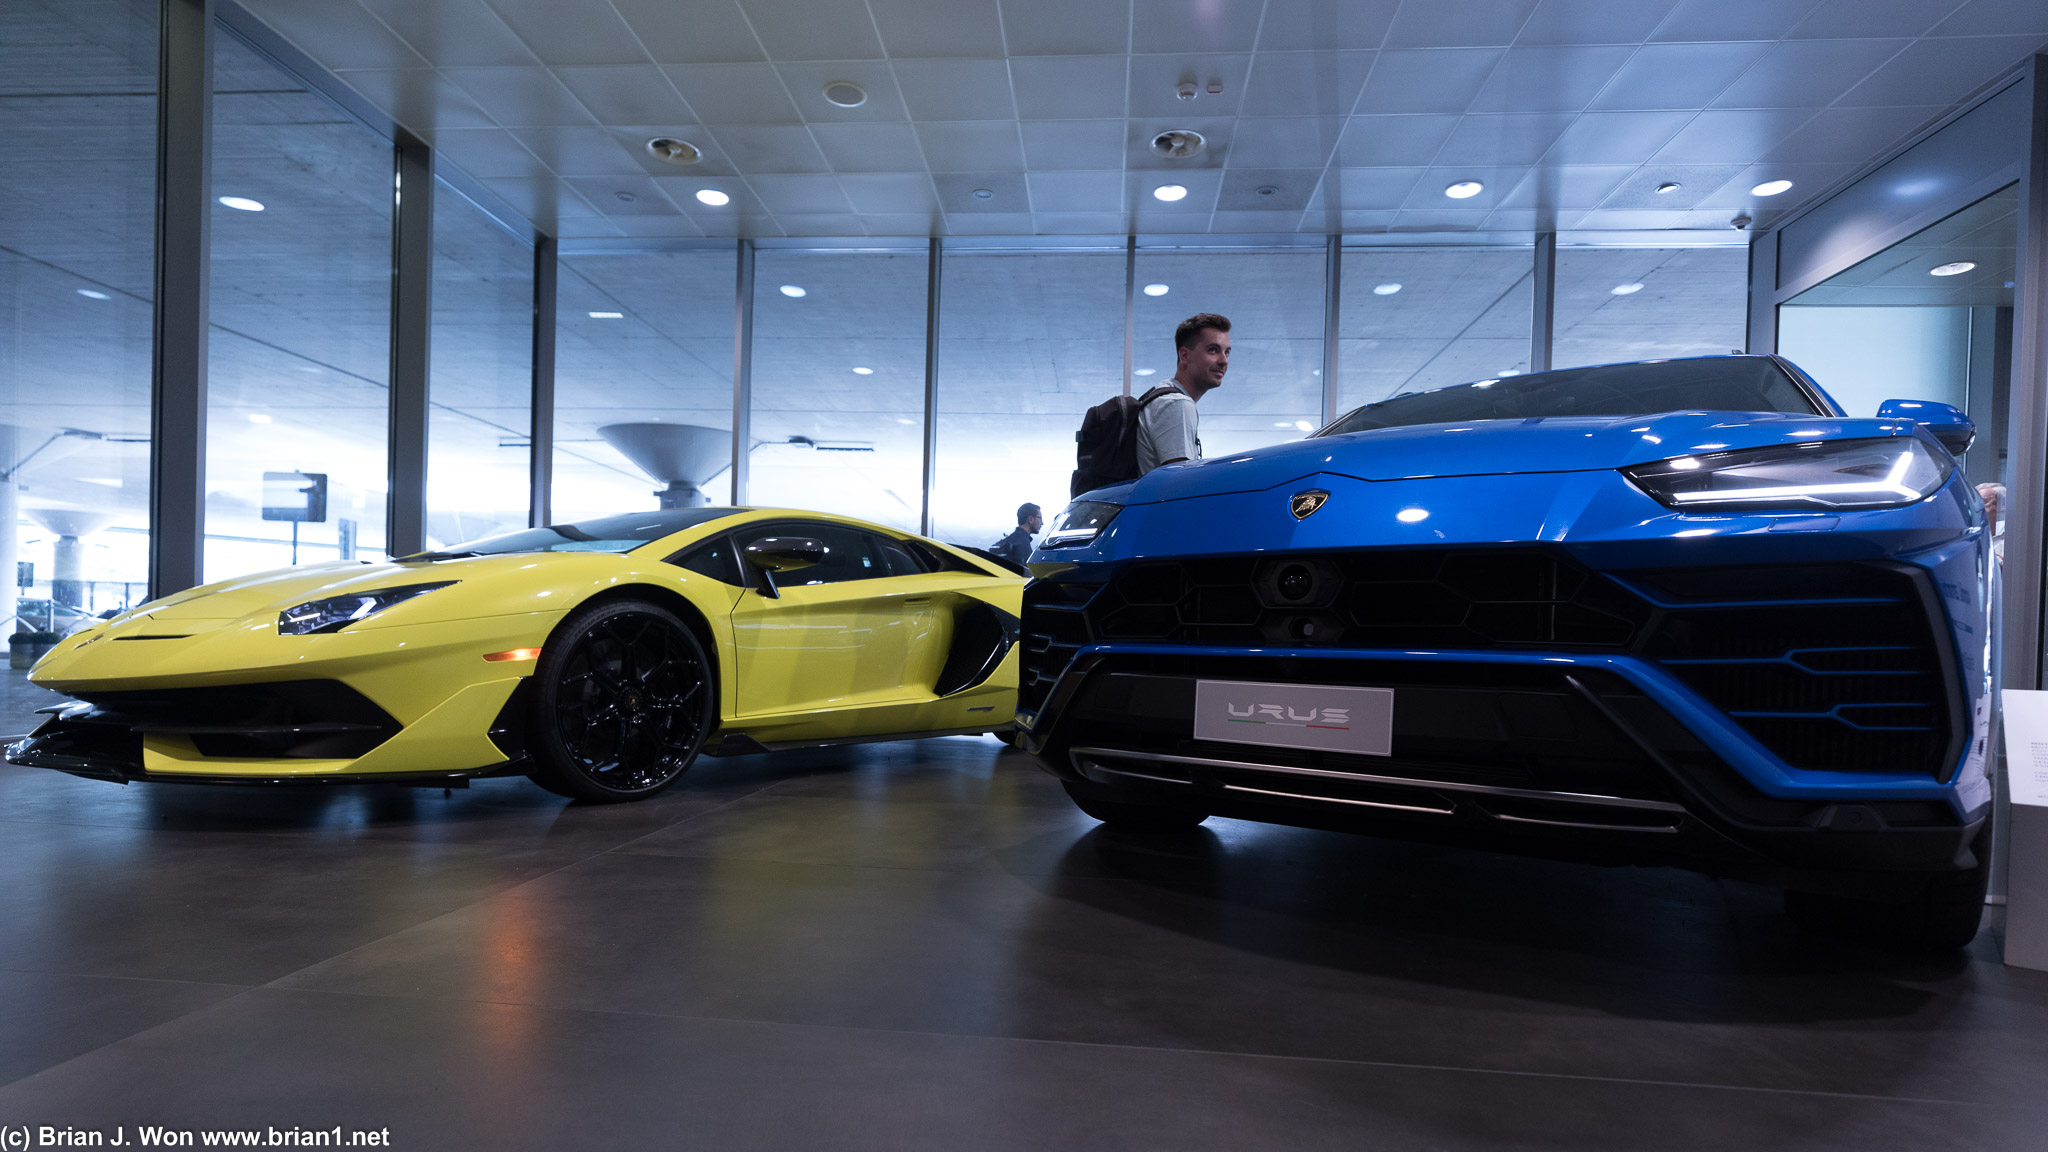 Lamborghini Aventador SV and Lamborghini Urus on display at Bologna Airport.